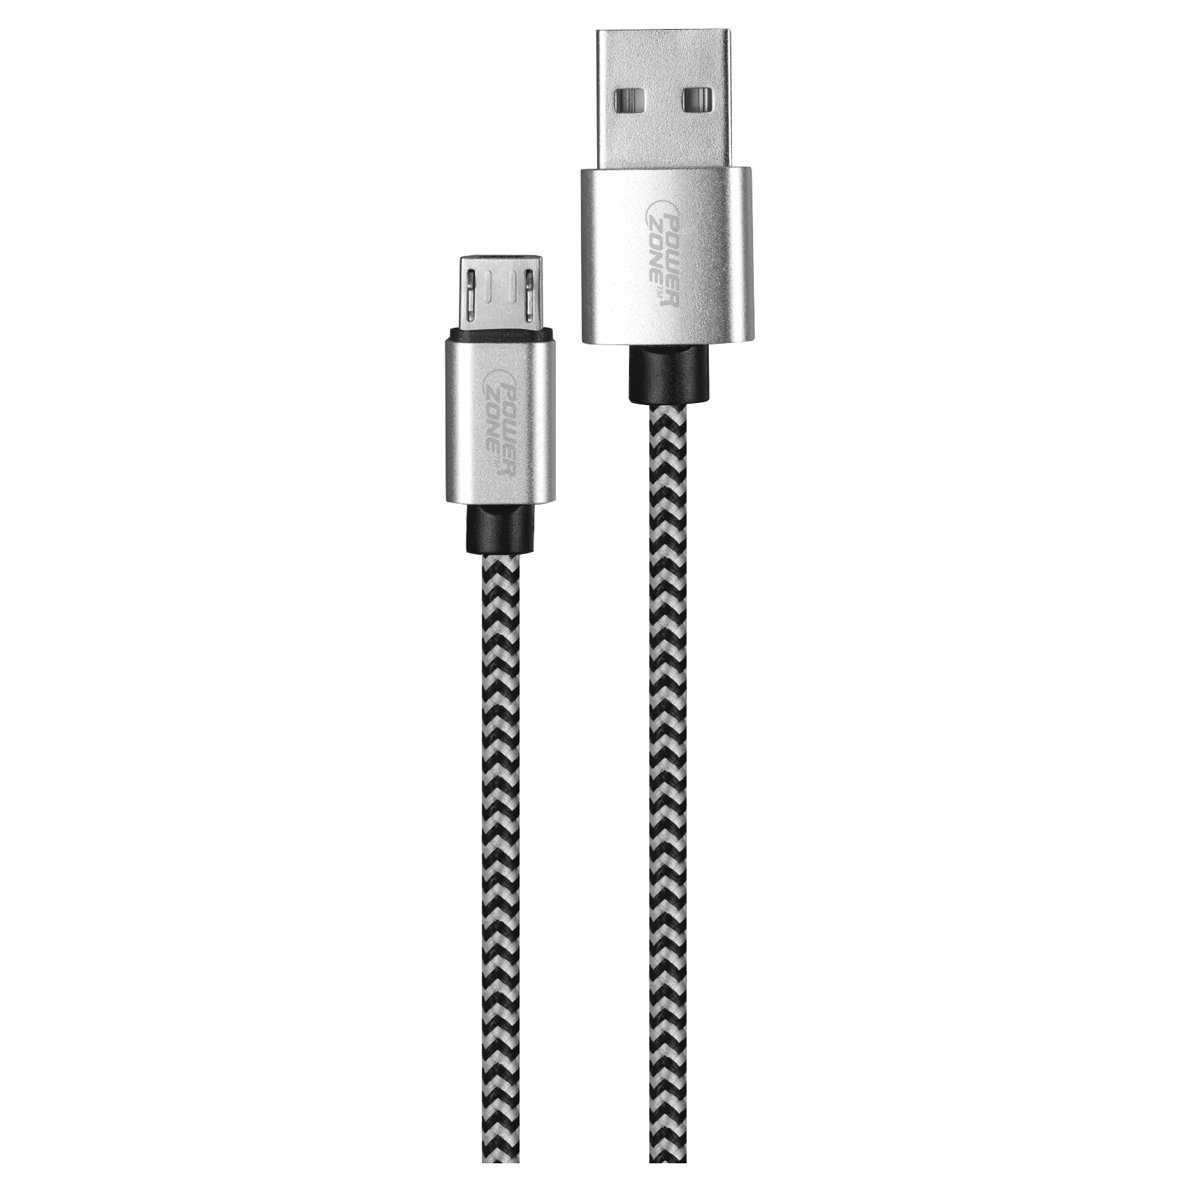 KL-029X-1M-MICRO Micro Charging Cable, Micro USB, USB, Black/White Sheath, 3 ft L